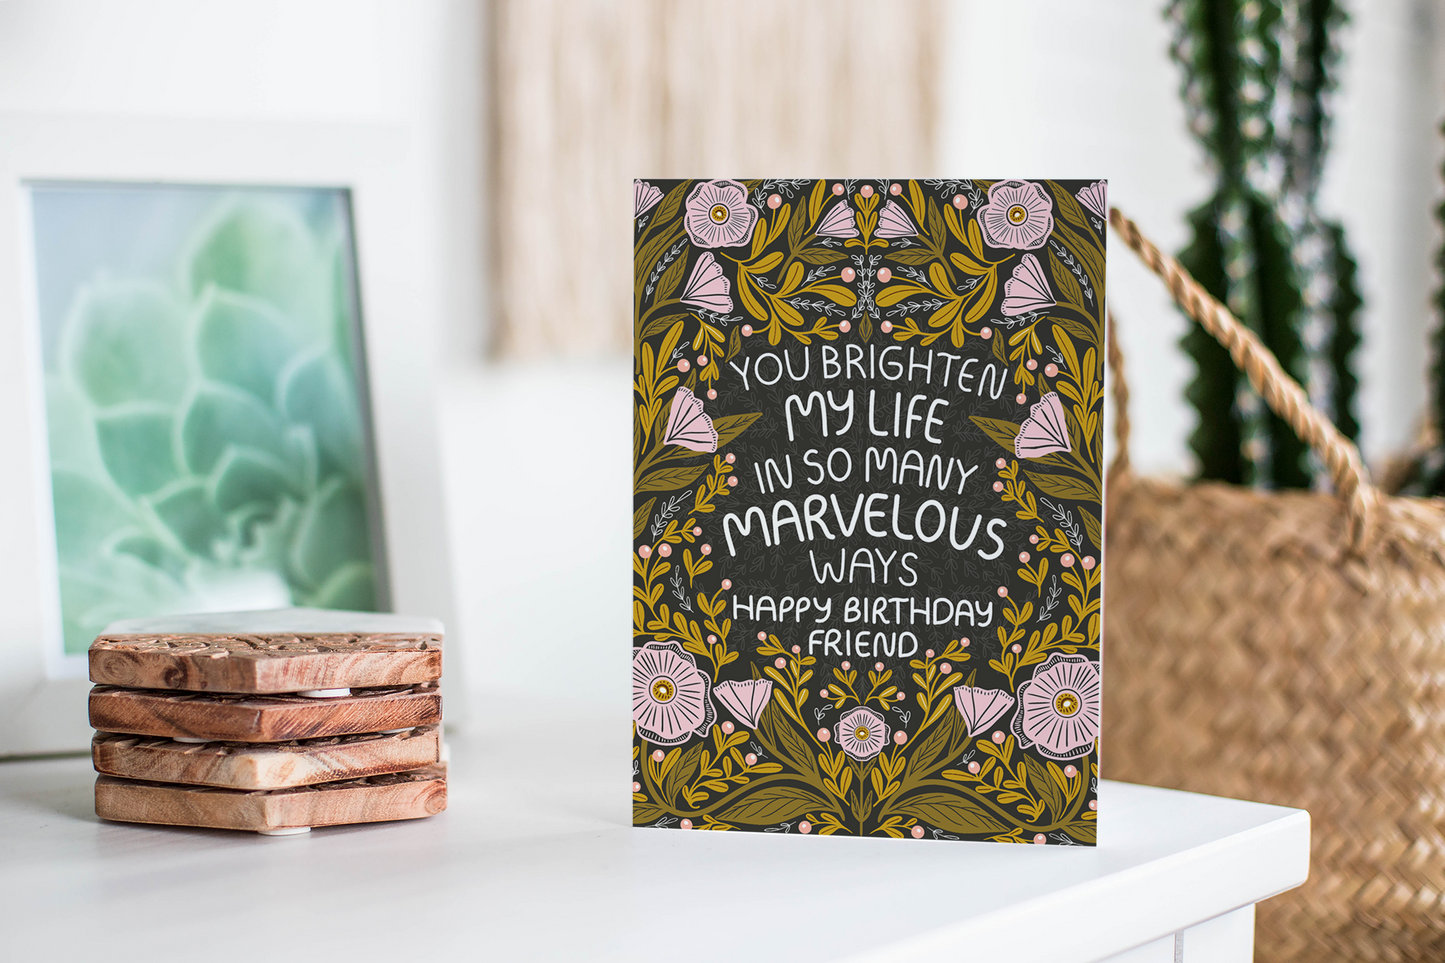 Marvelous Ways Birthday Card